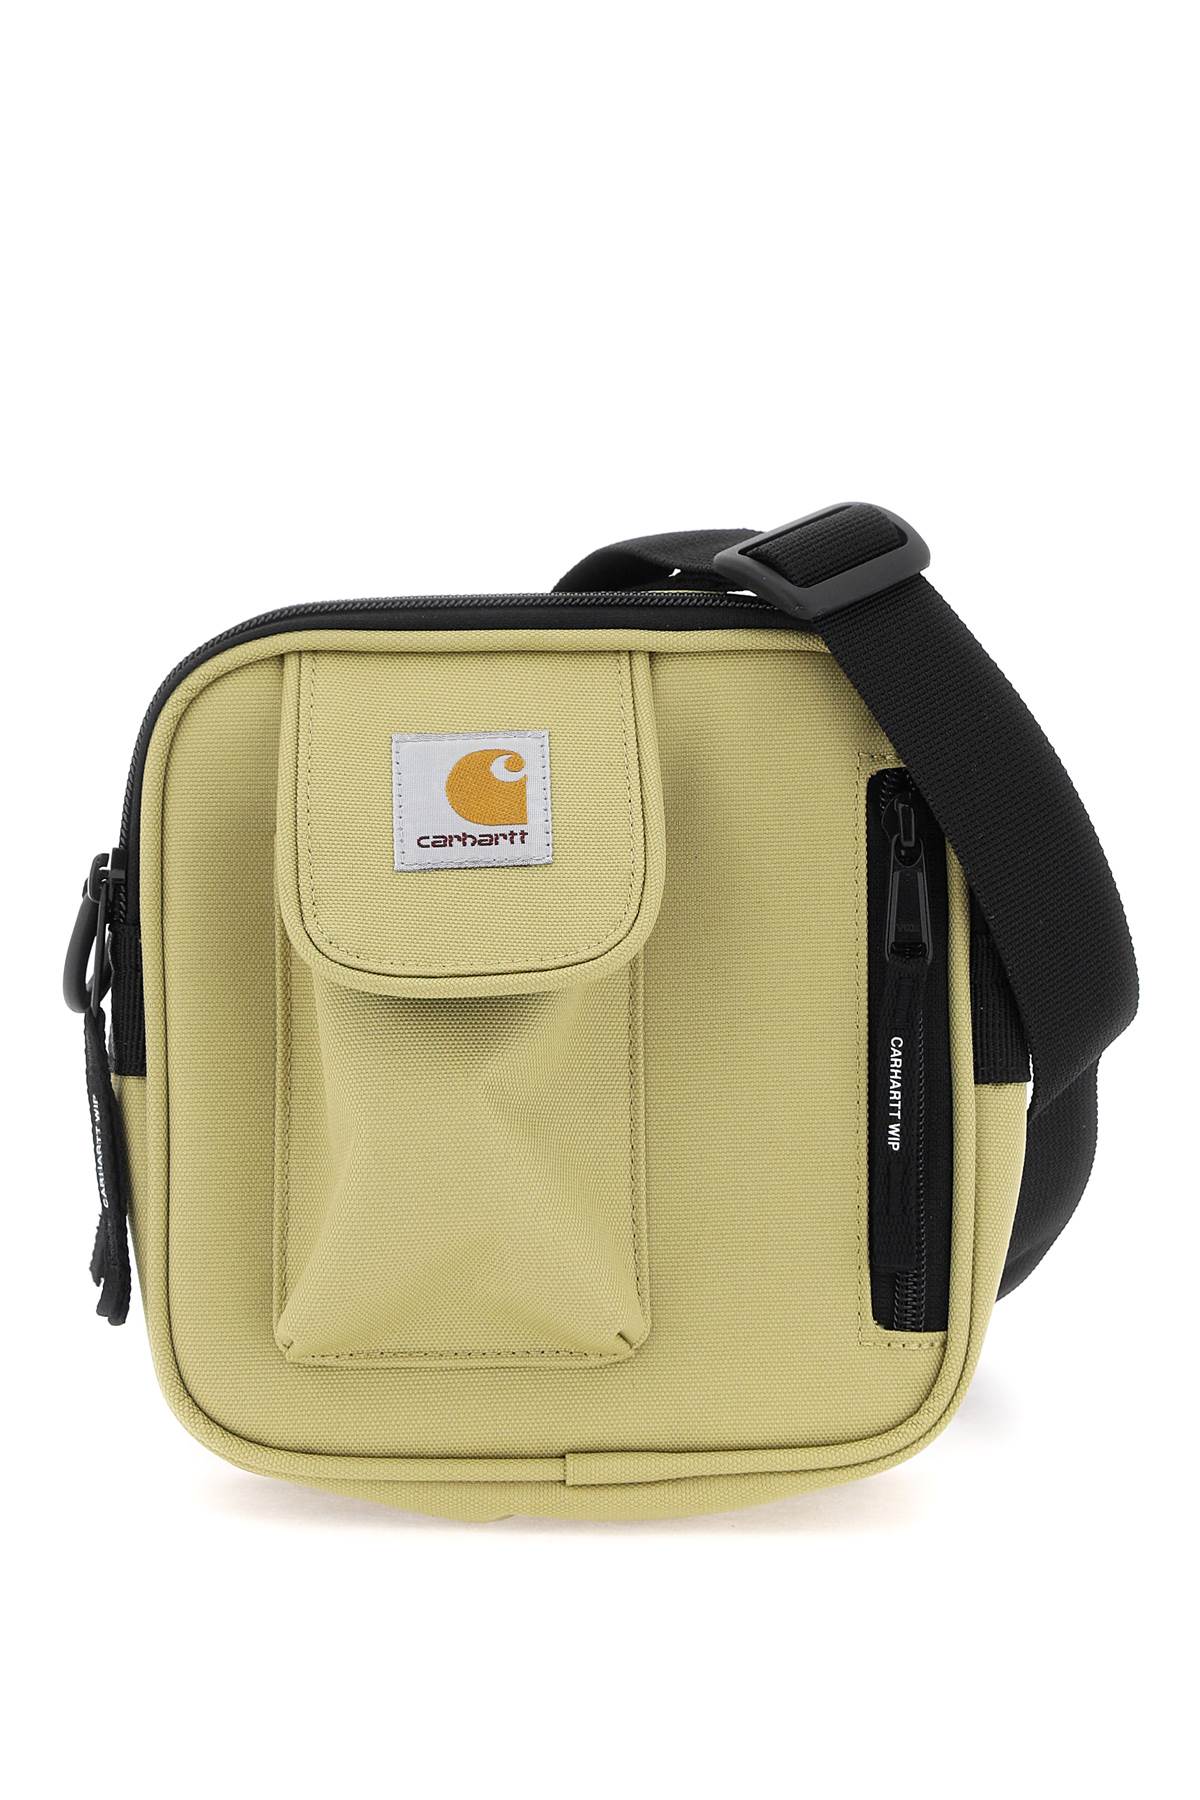 Carhartt wip essentials shoulder bag with strap-0